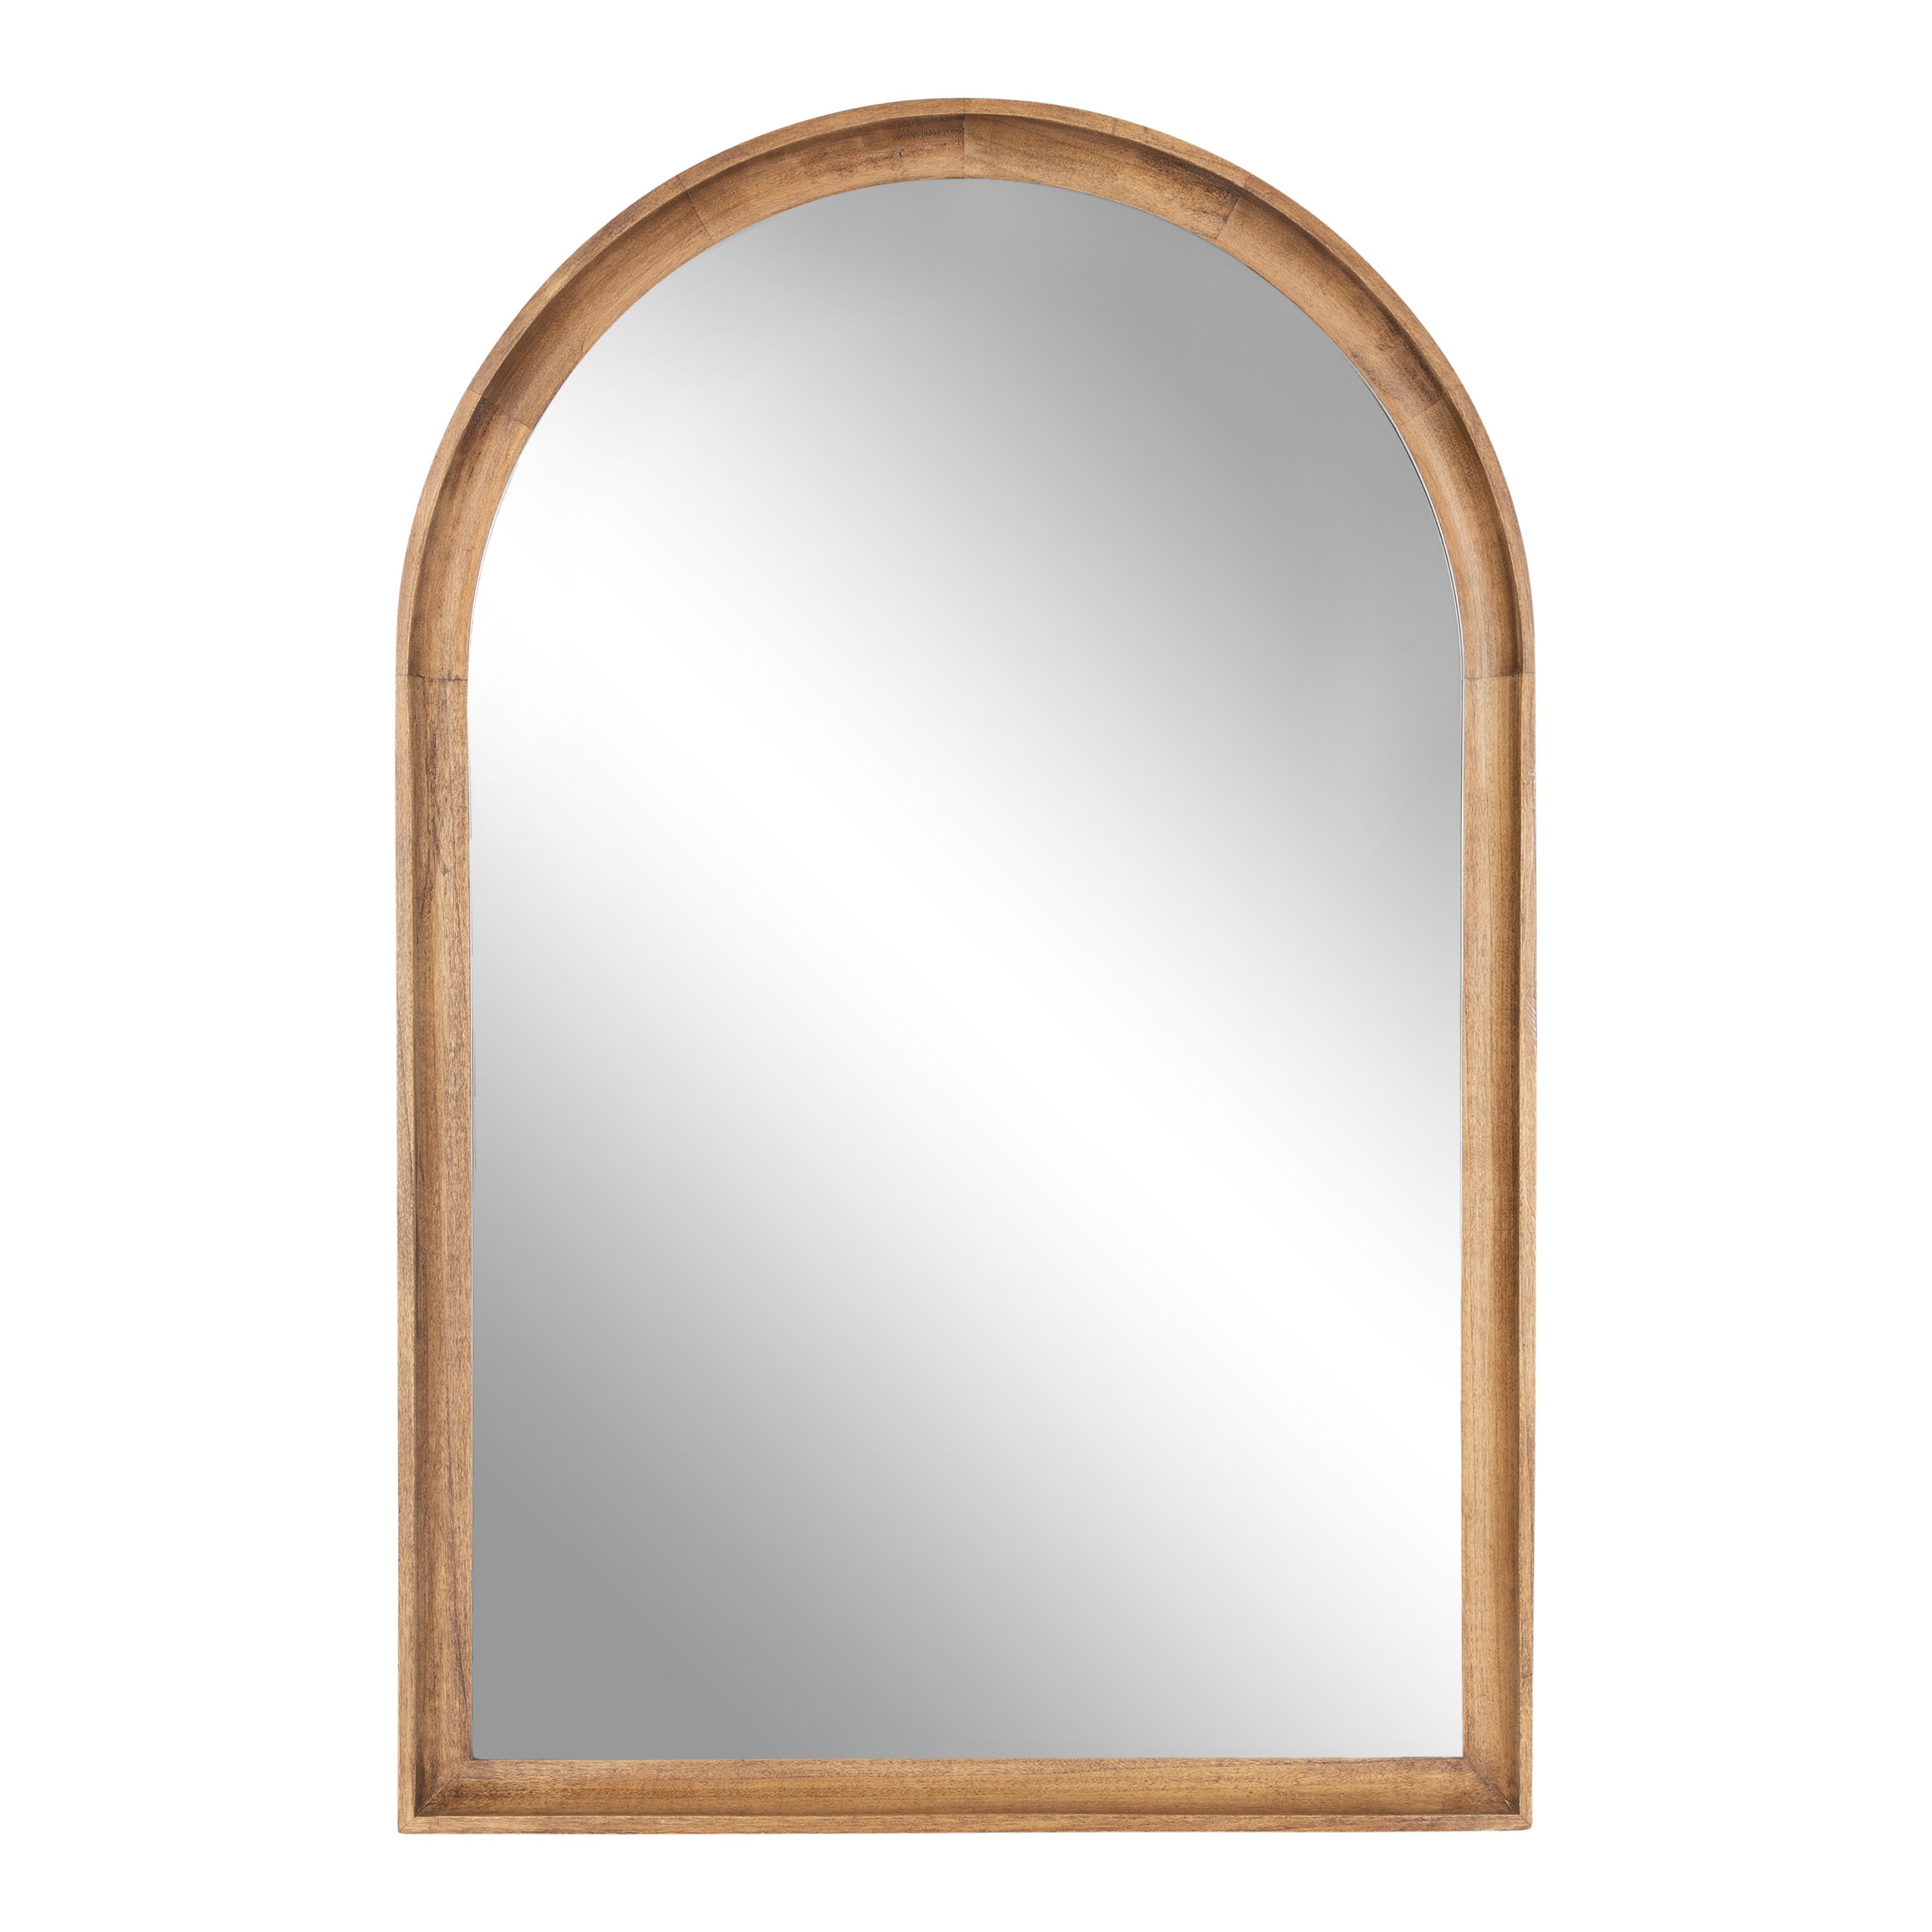 Hatherleigh Arch Wood Wall Mirror